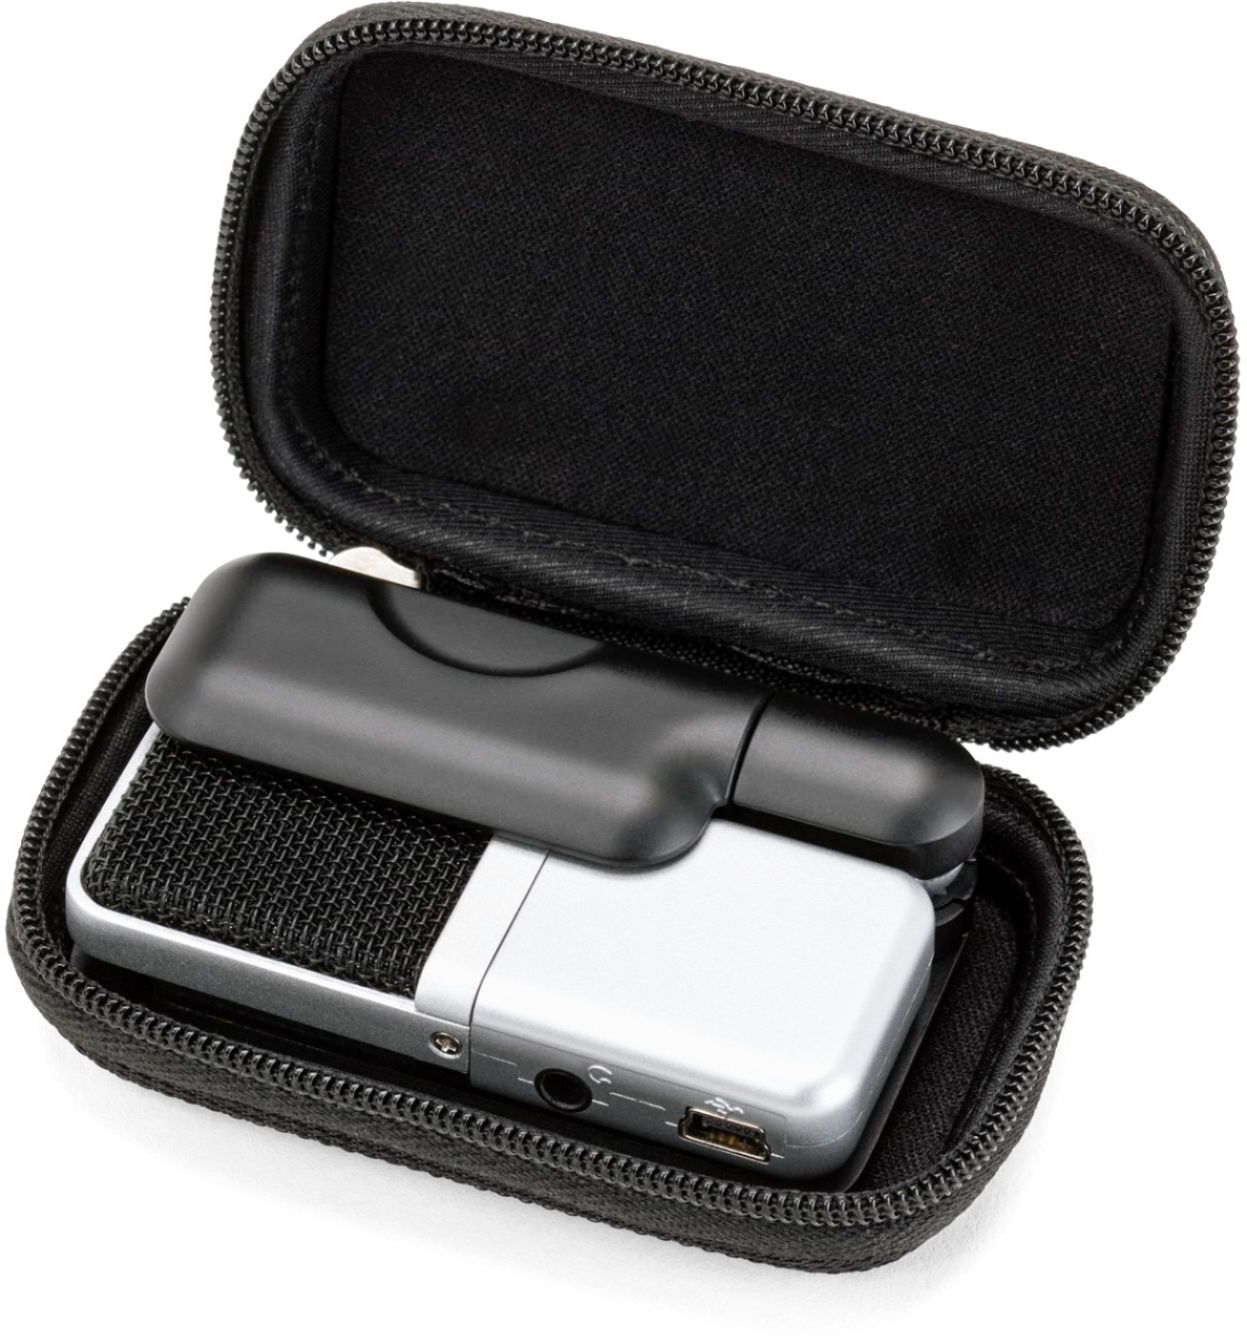 Mic Portable USB Microphone Software SAGOMICHD - Best Buy